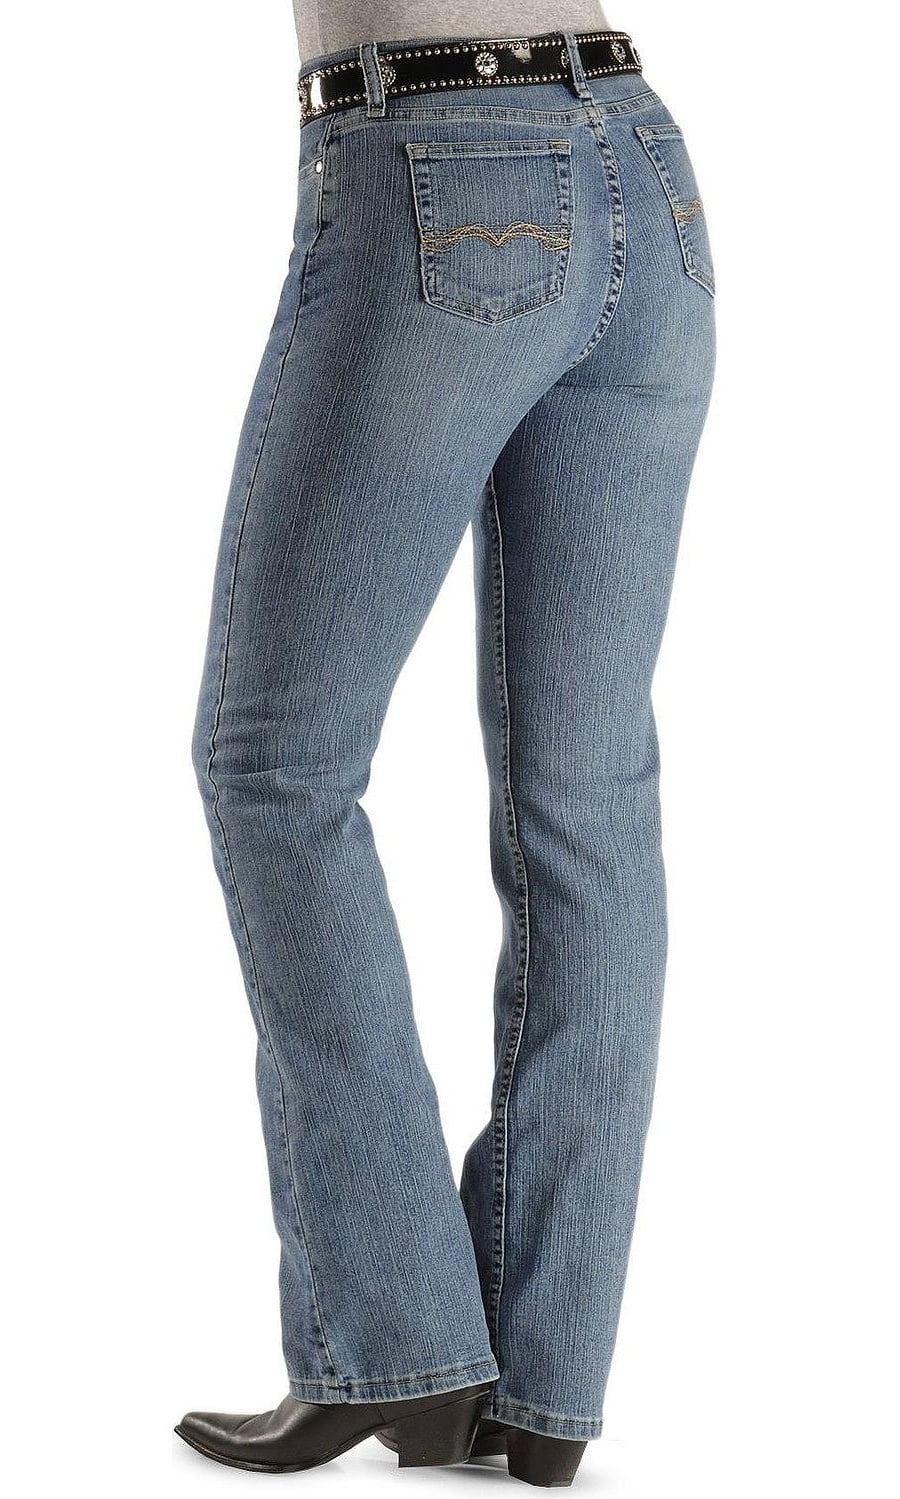 Wrangler Women's Jeans As Real Whisper Classic Fit 30